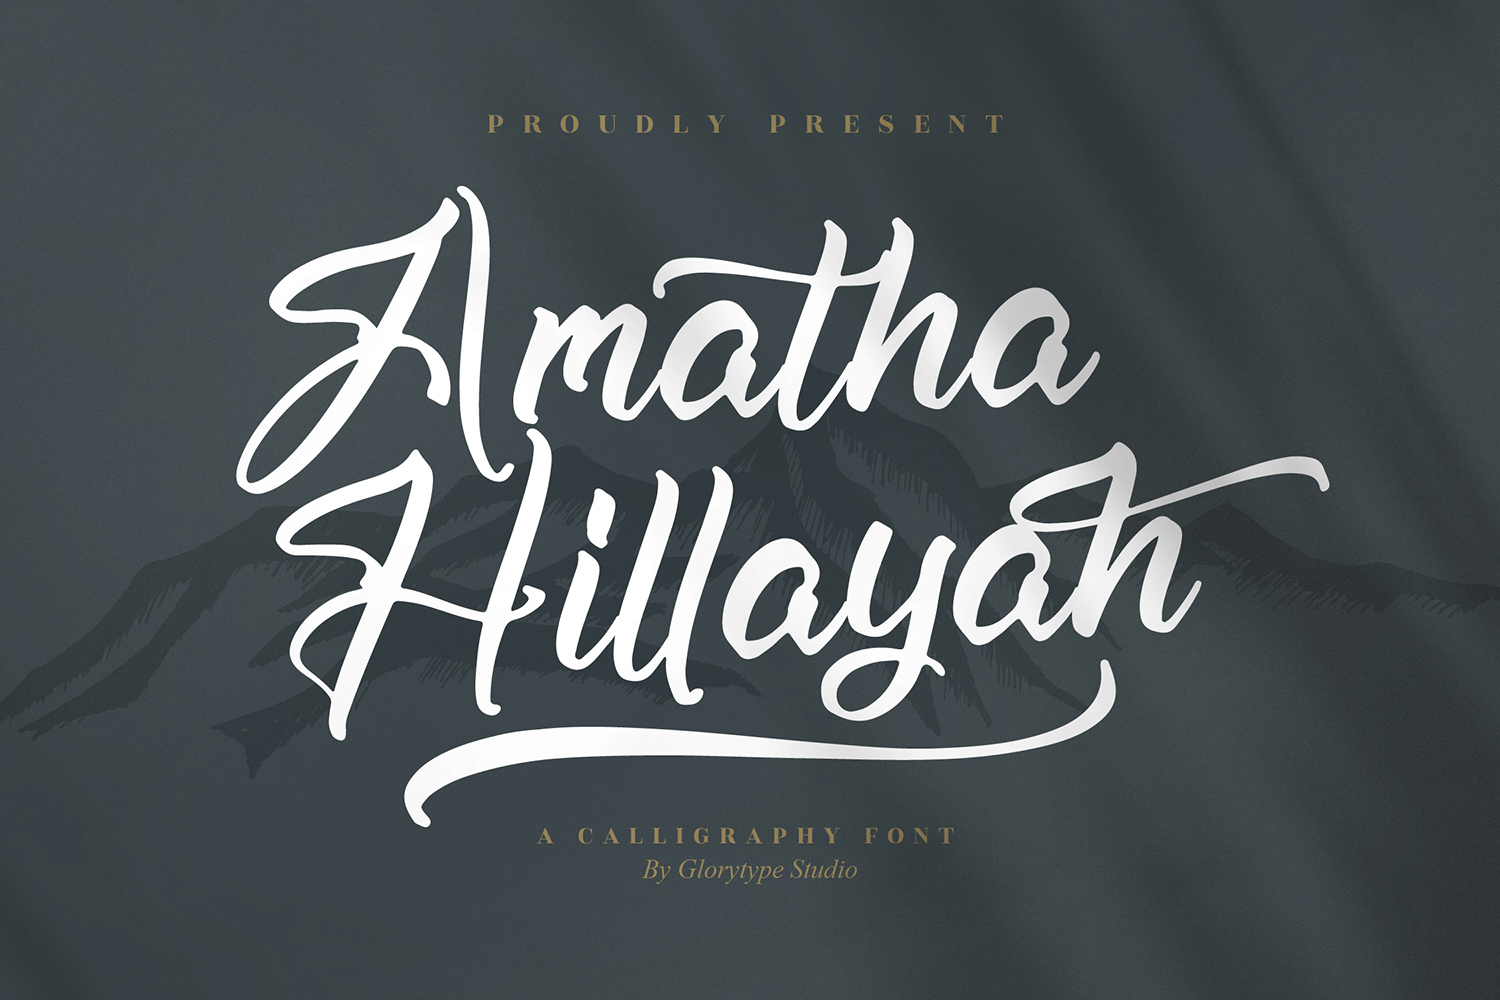 Amatha Hillayah Free Font